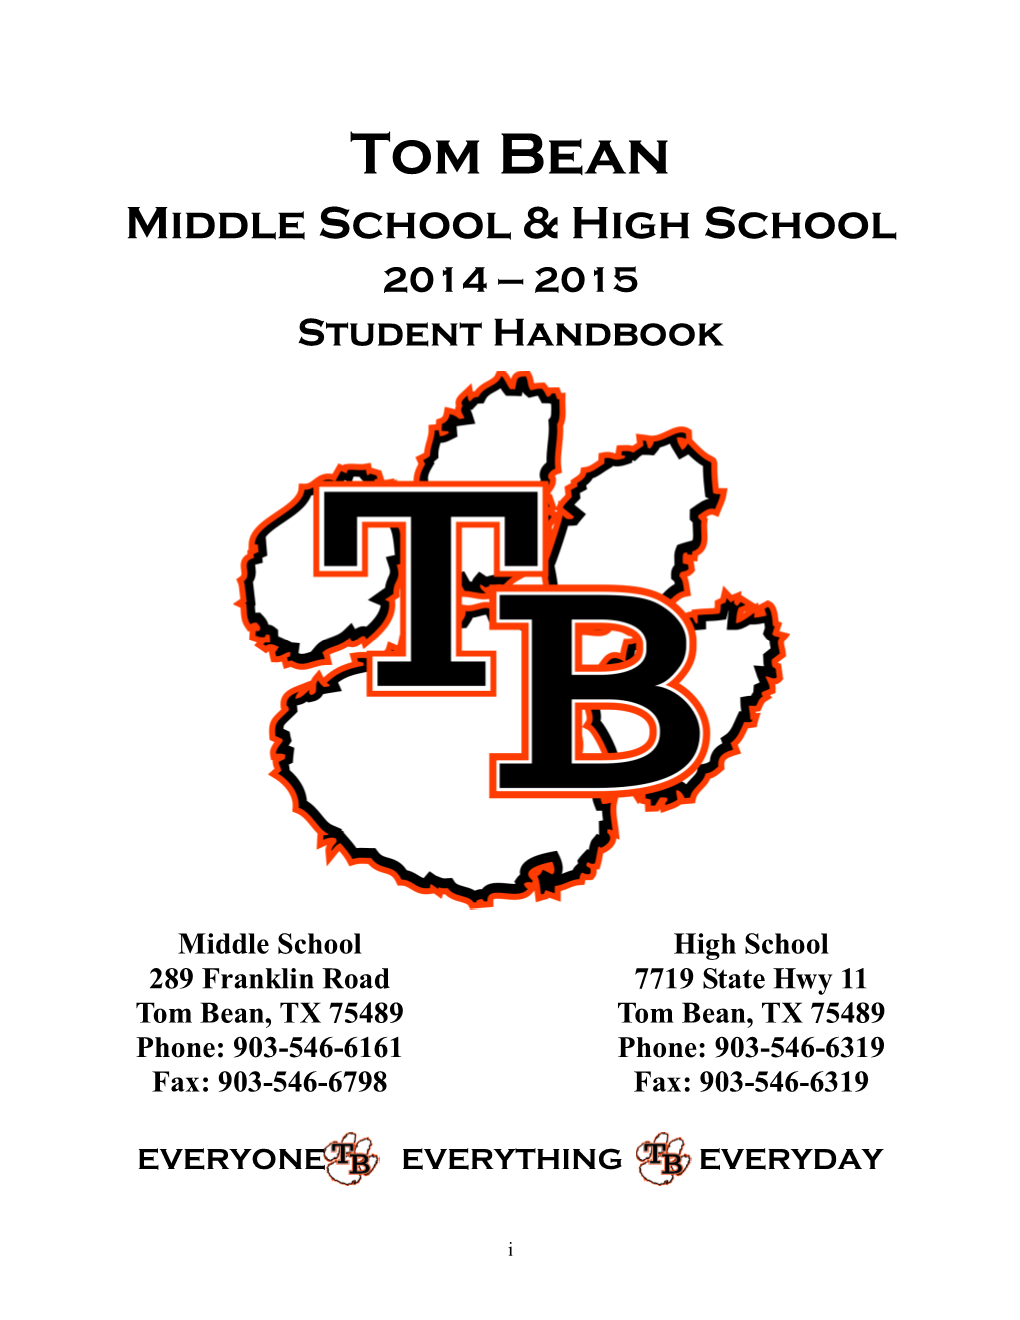 Tom Bean Middle School & High School 2014 – 2015 Student Handbook